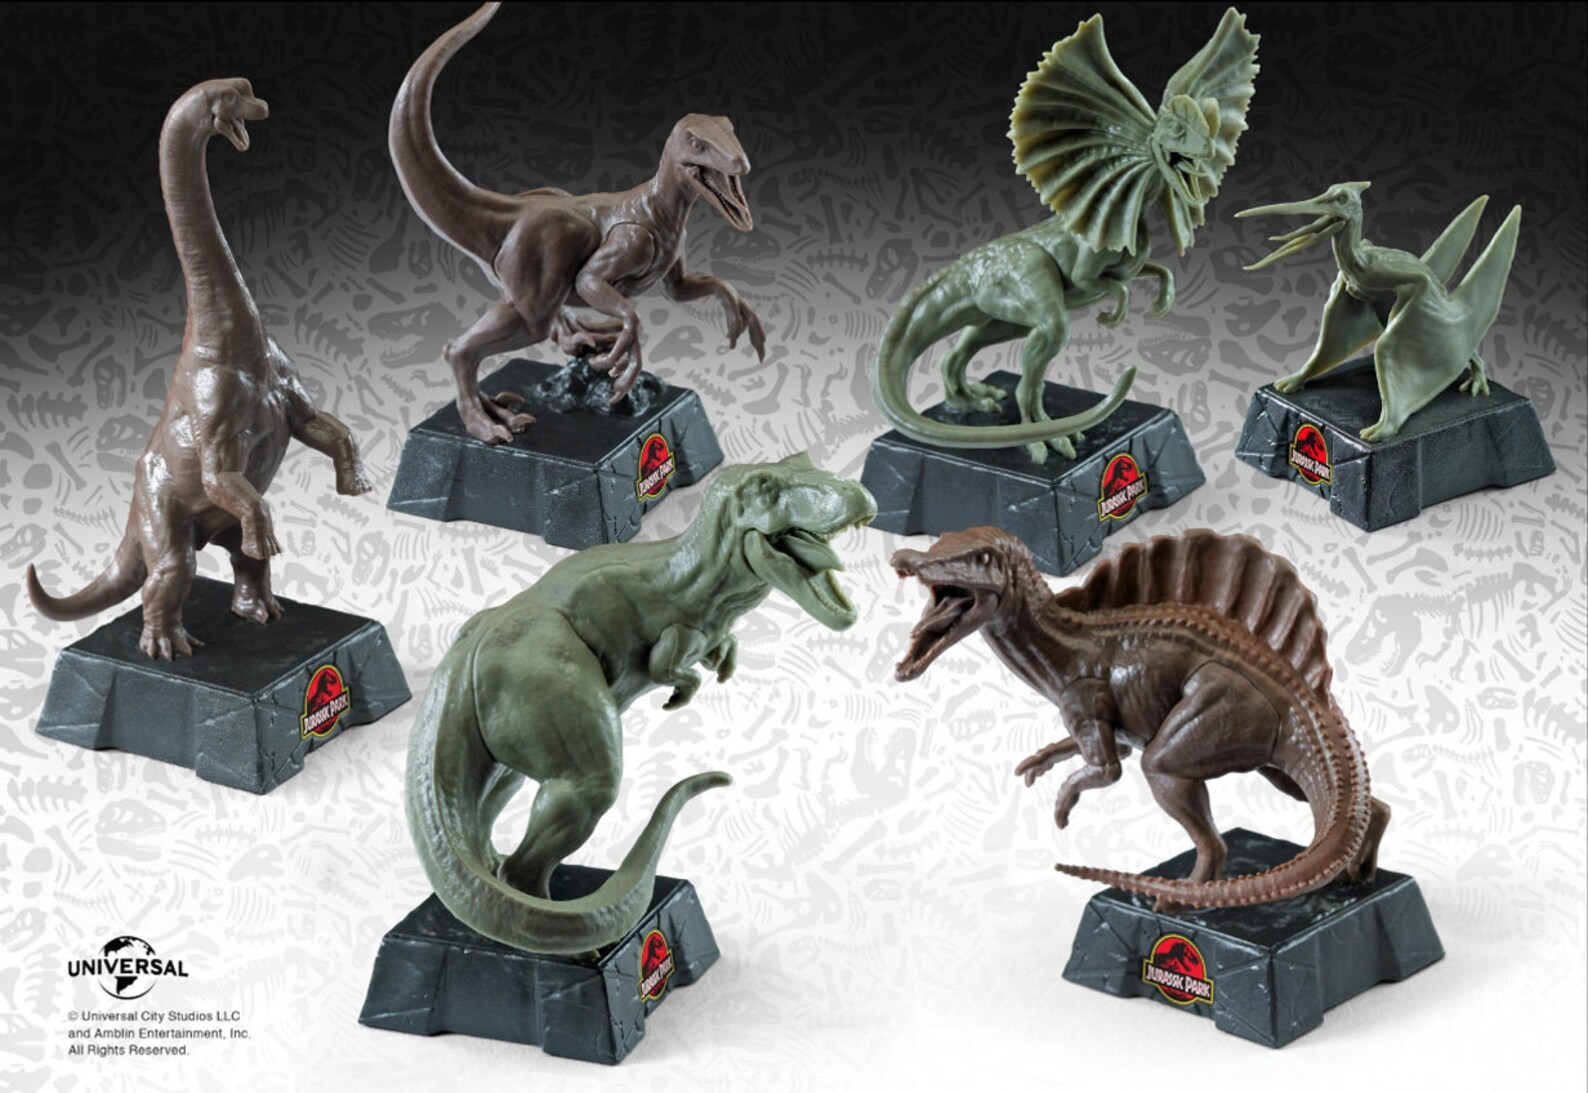 dinosaur chess set amazon